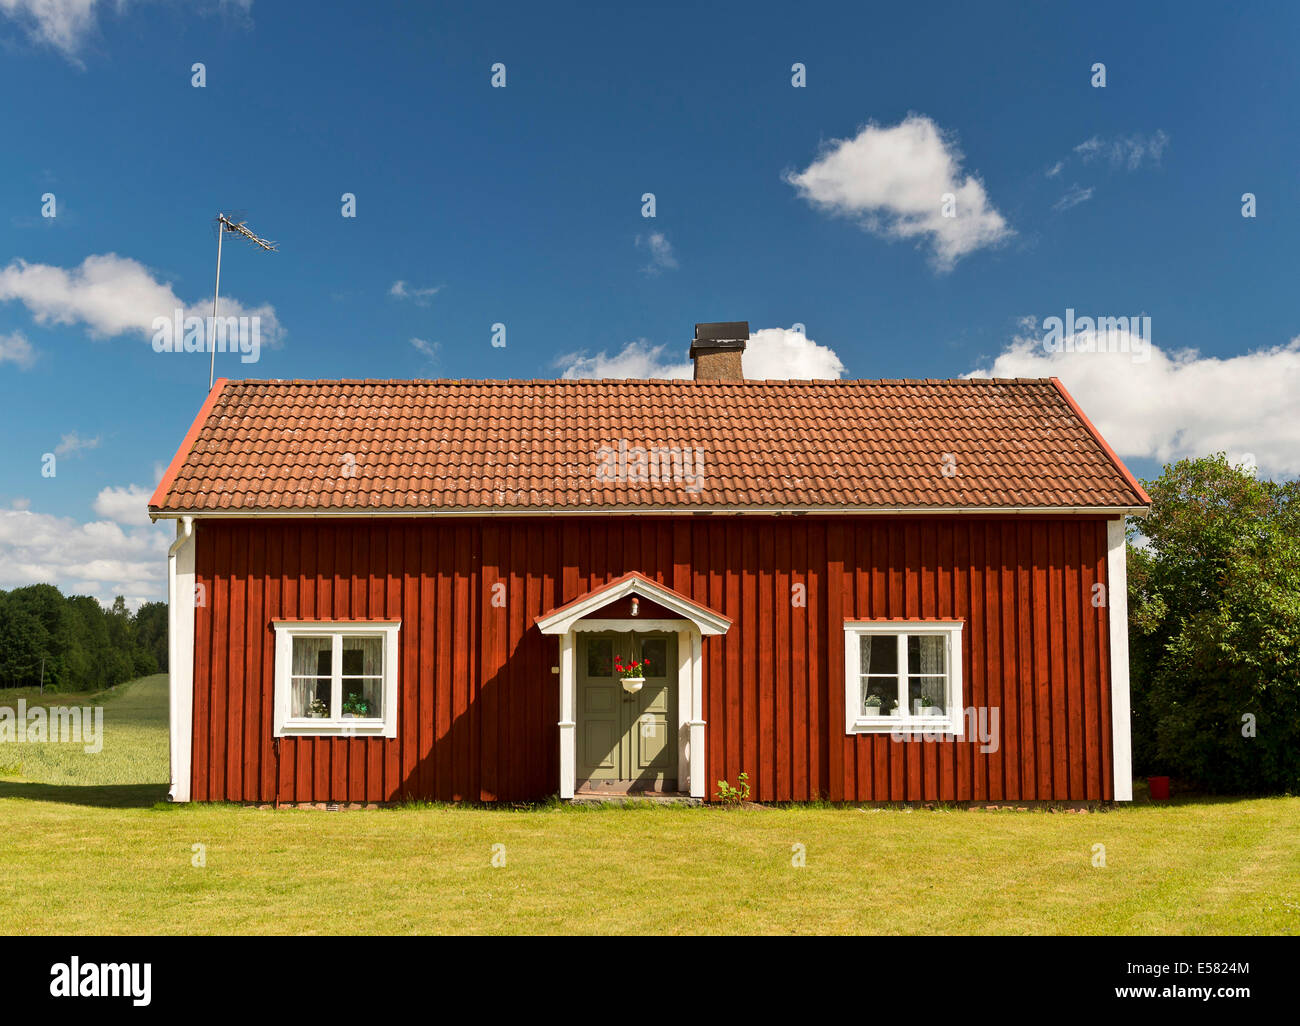 House painted Falu red, Photo - Alamy